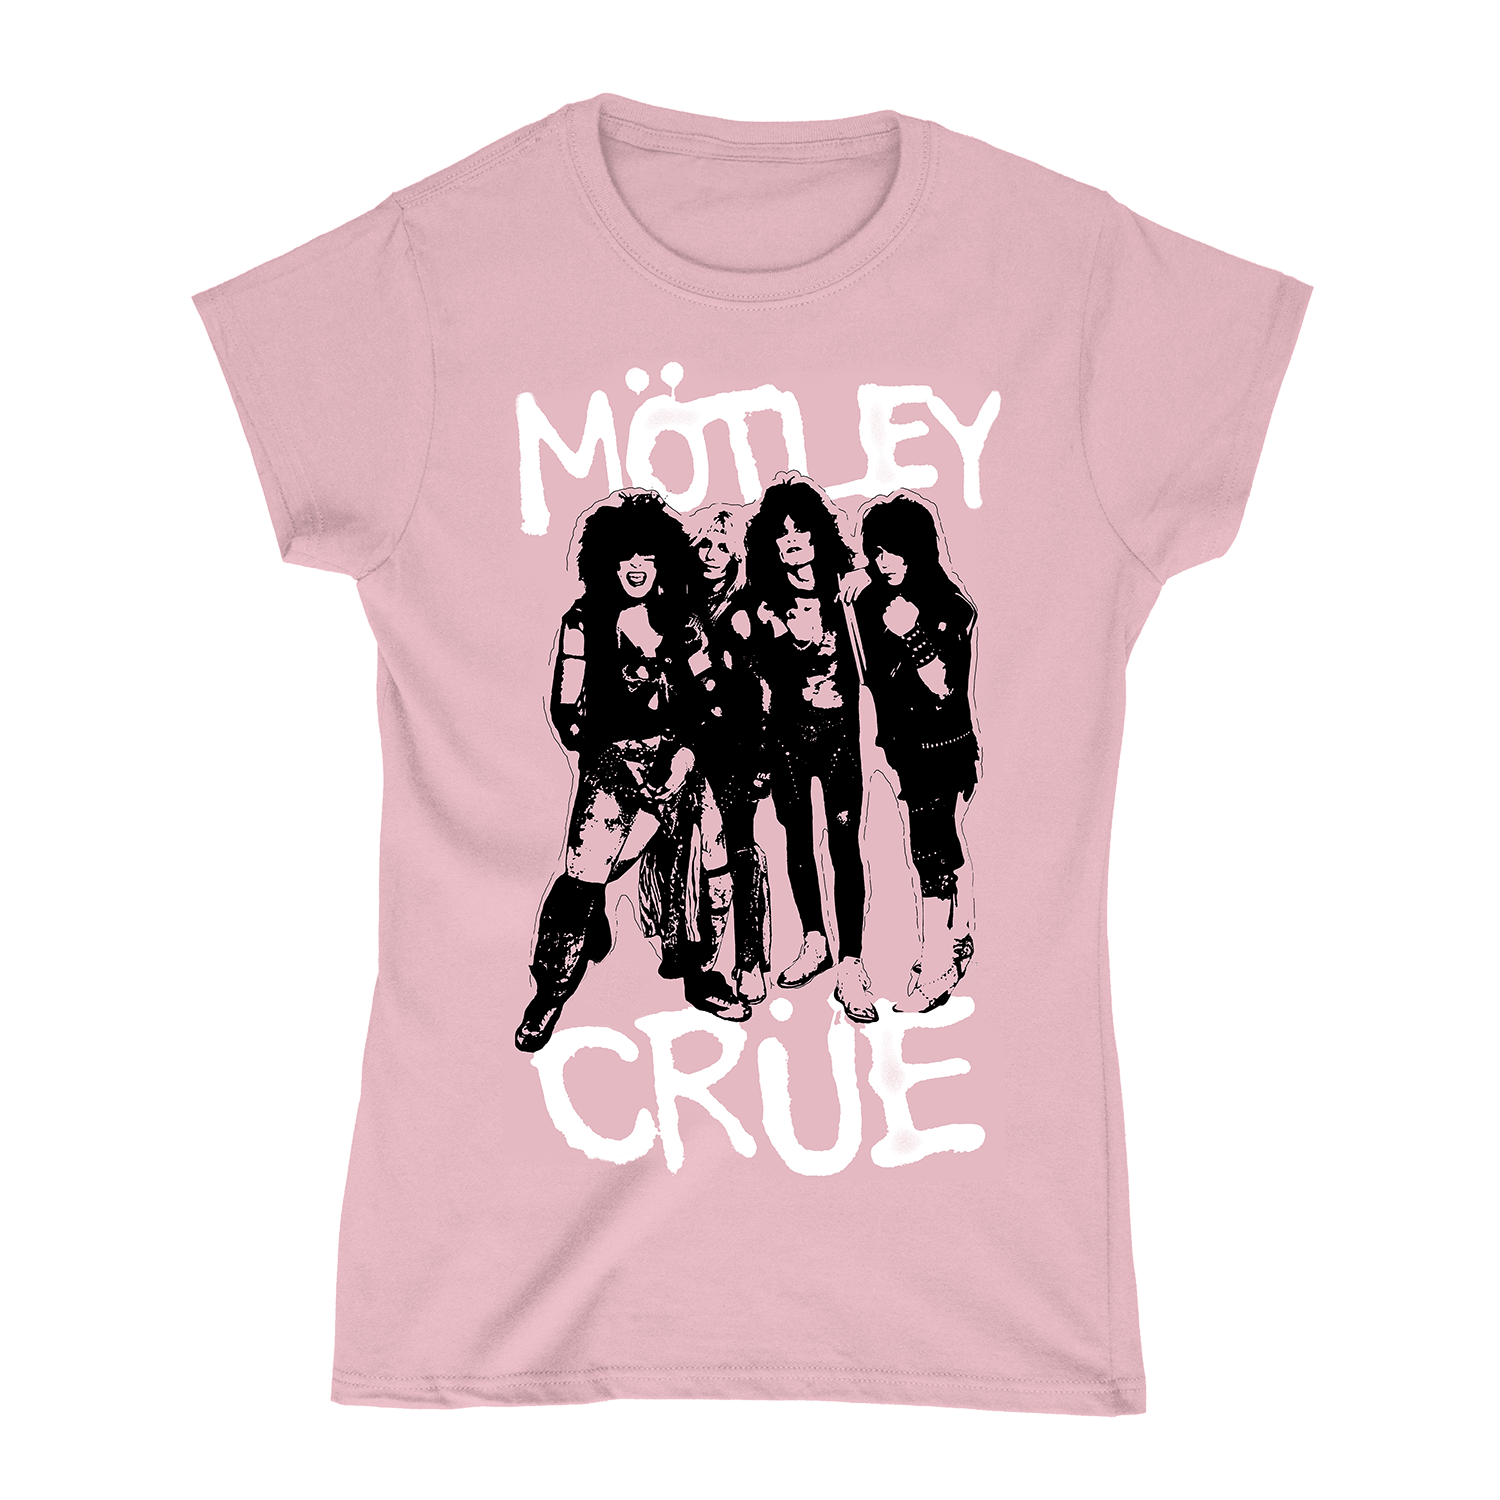 Vintage Motley Crue Band T Shirt Medium 80s Theatre of Pain 